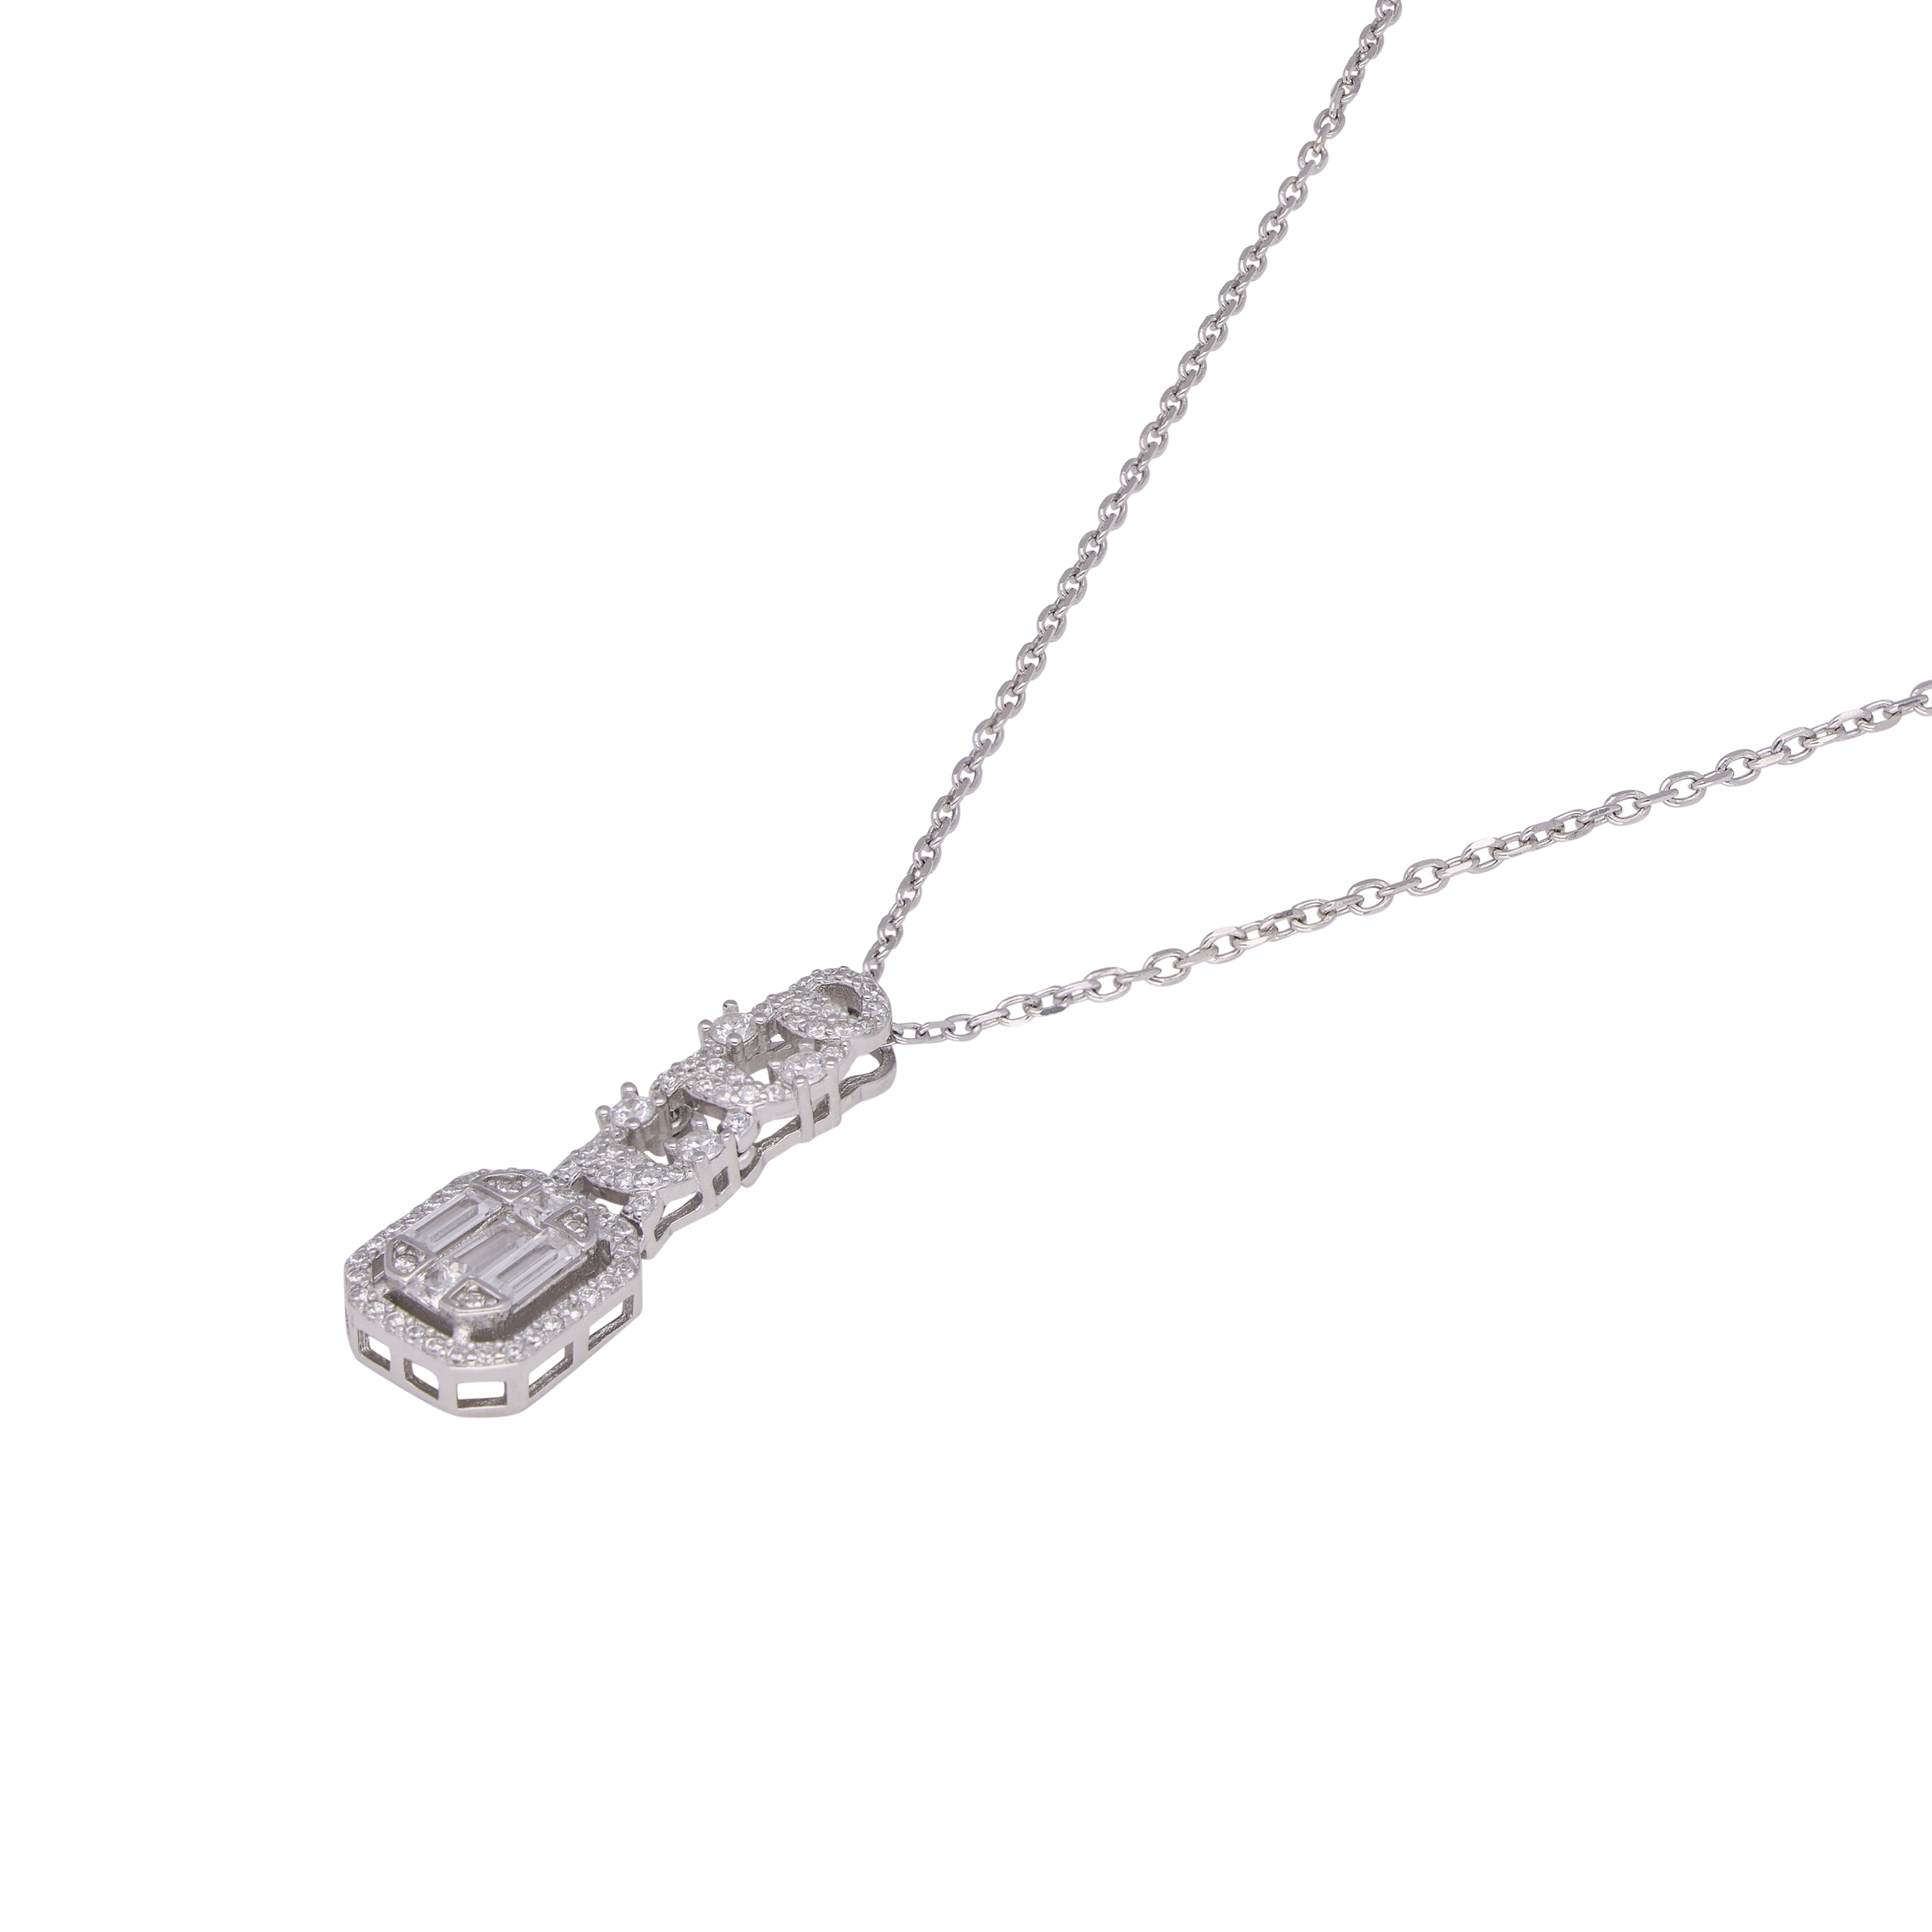 Serenity Sparkle: Silver Drop Pendant Chain | SKU: 0002984063, 0002984179, 0002984001